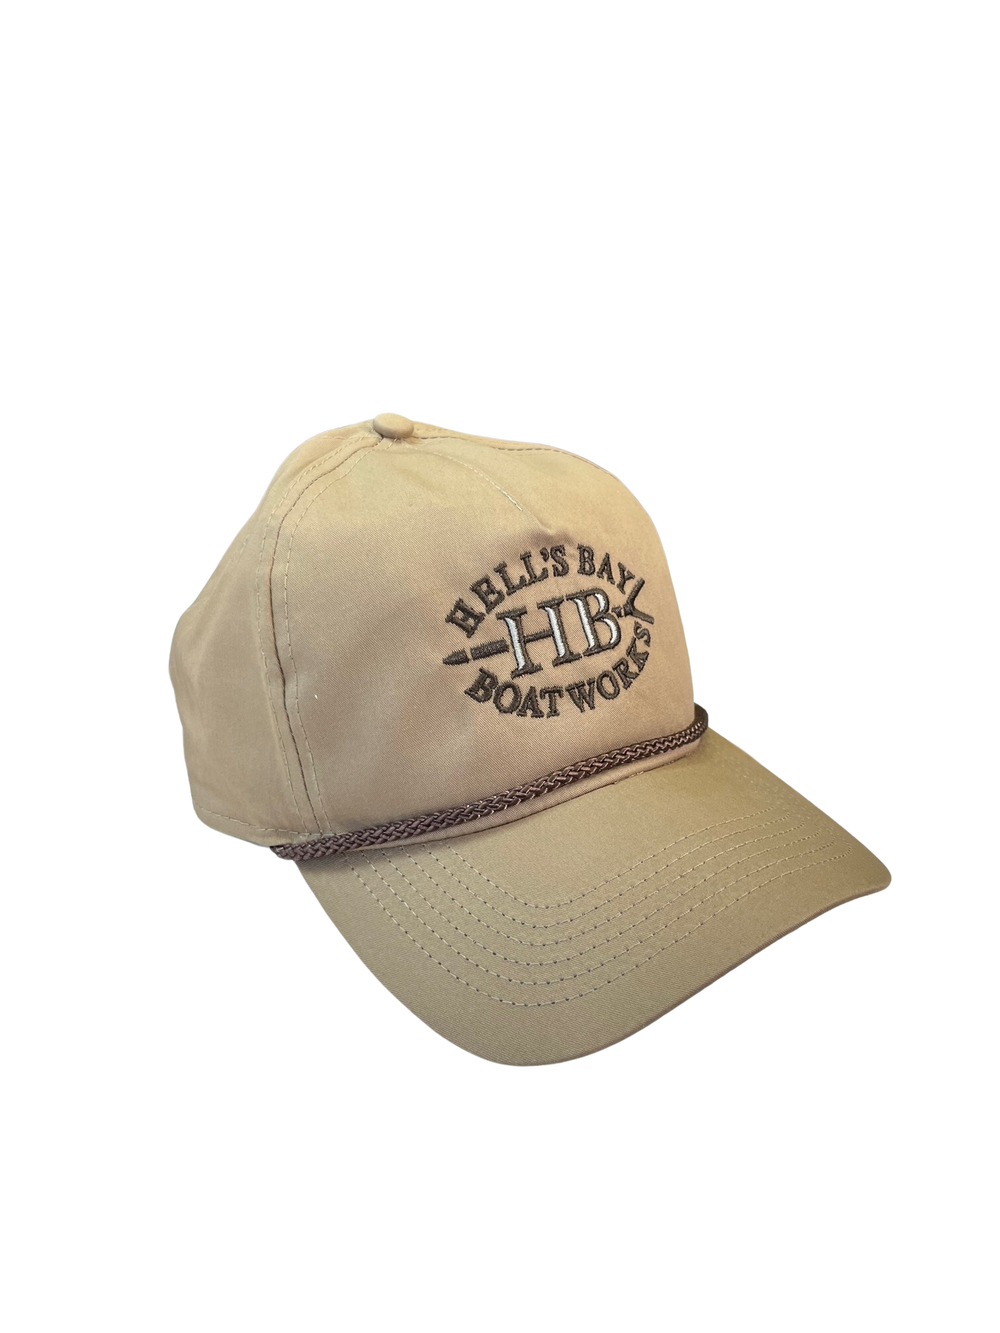 Hell's Bay Logo Rope Hat - Khaki / Brown